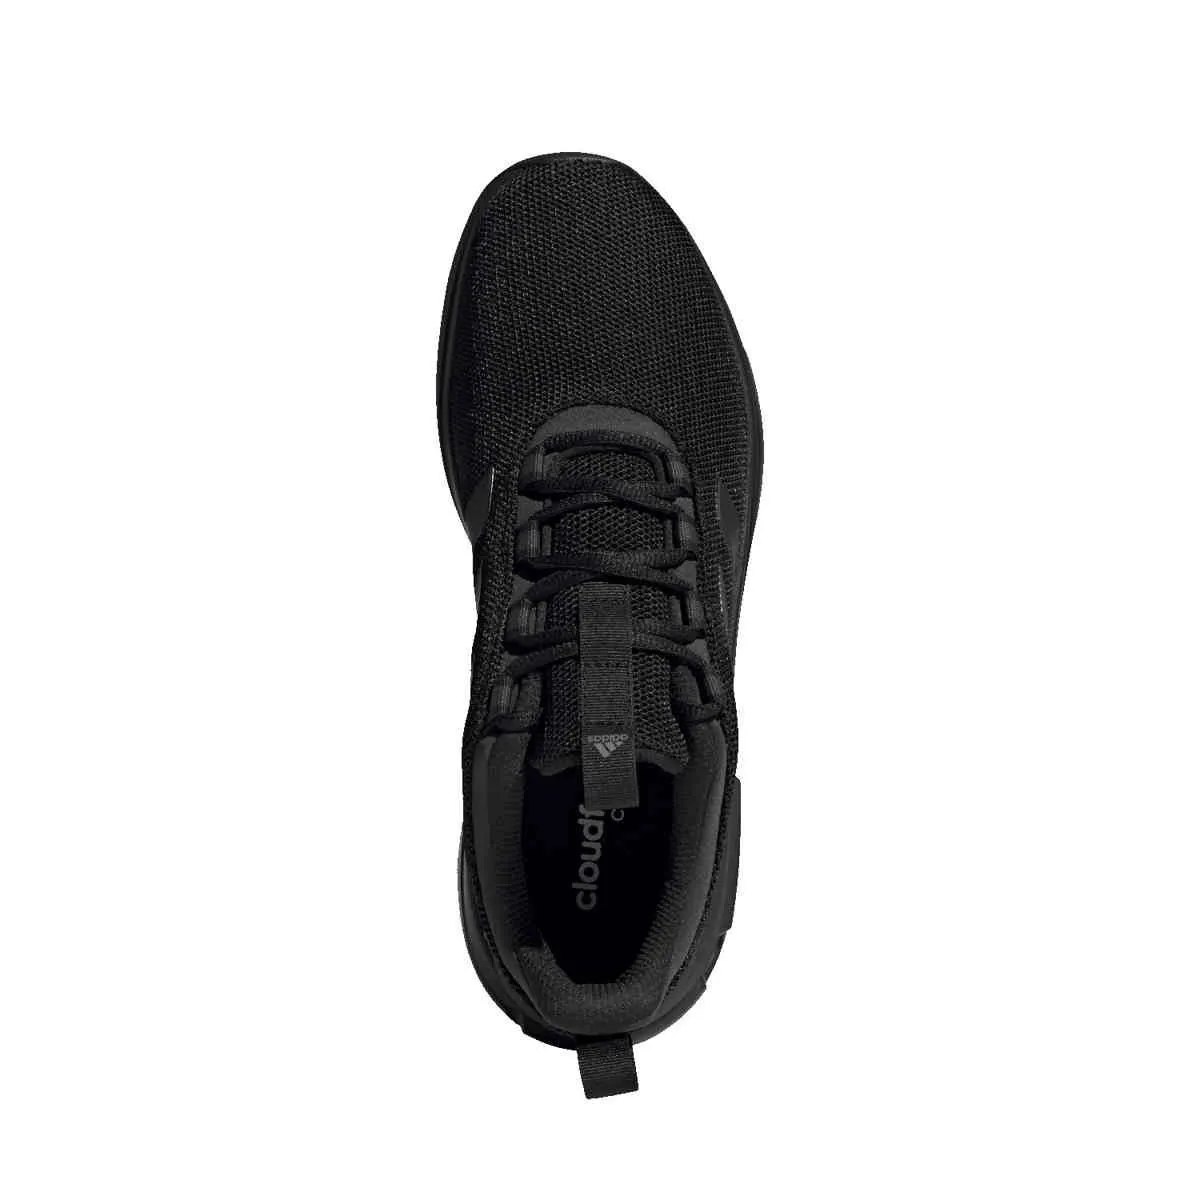 adidas shoes Racer TR23 black